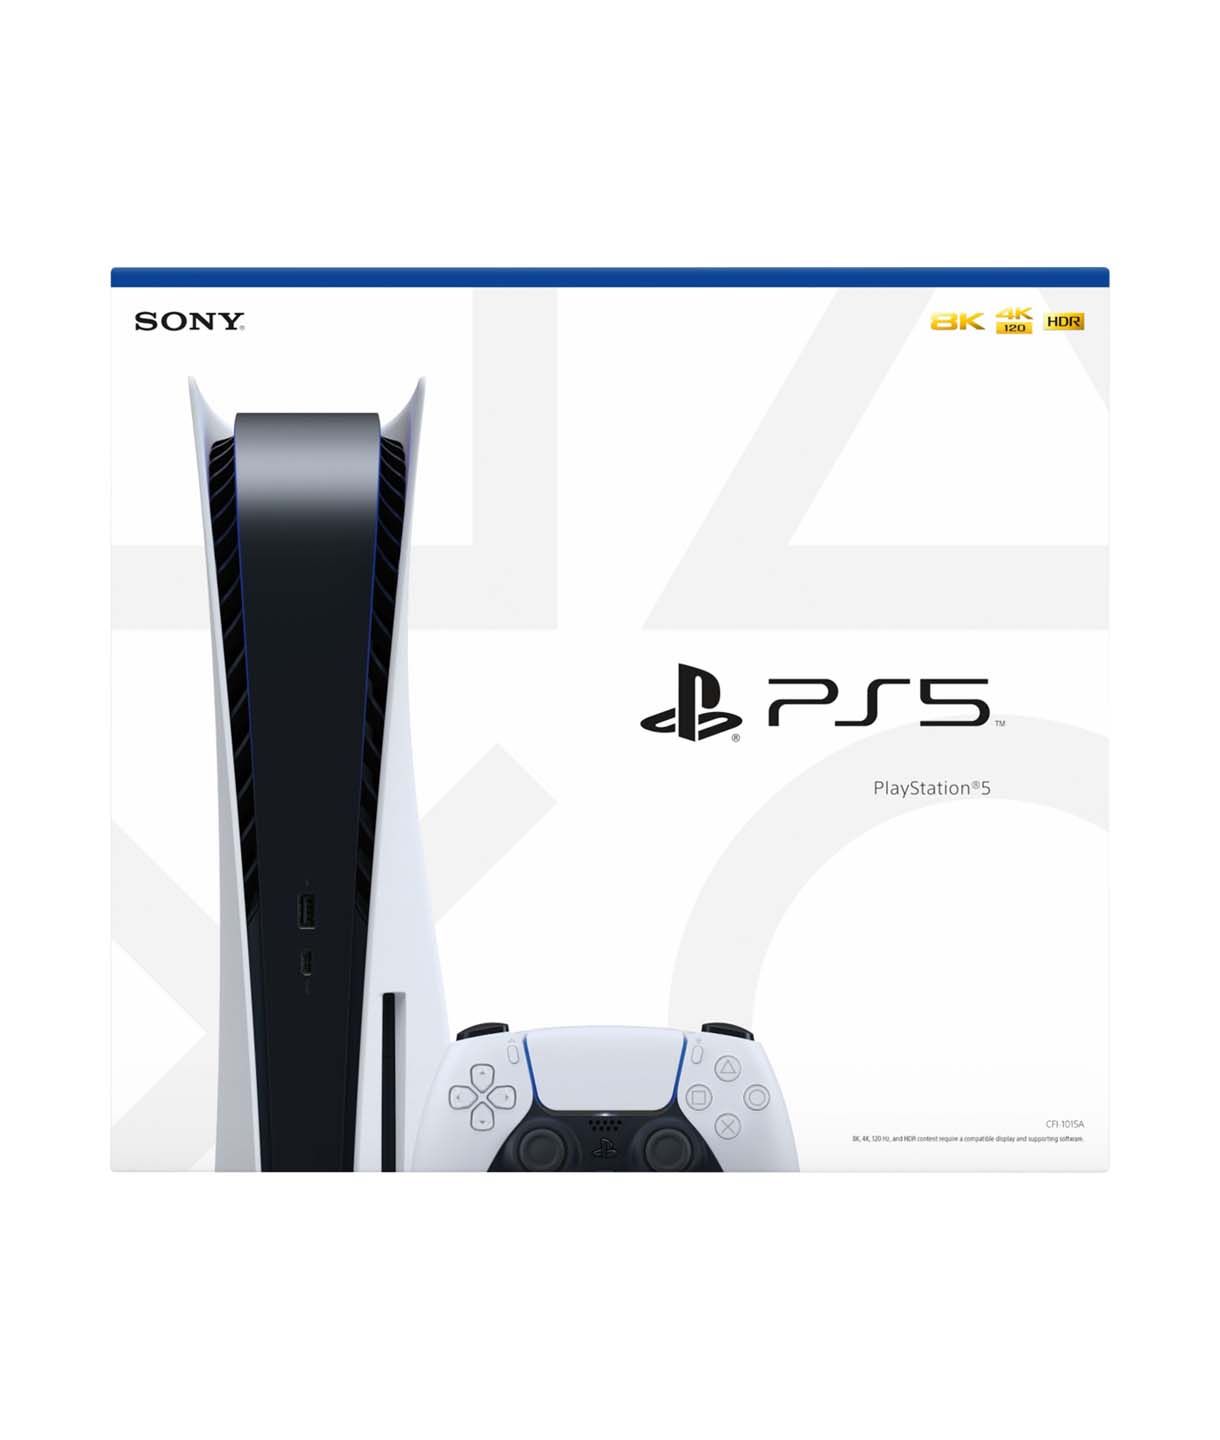 Sony PS5 Standard Edition | CFI-1200A01 - Japan - Vietnam